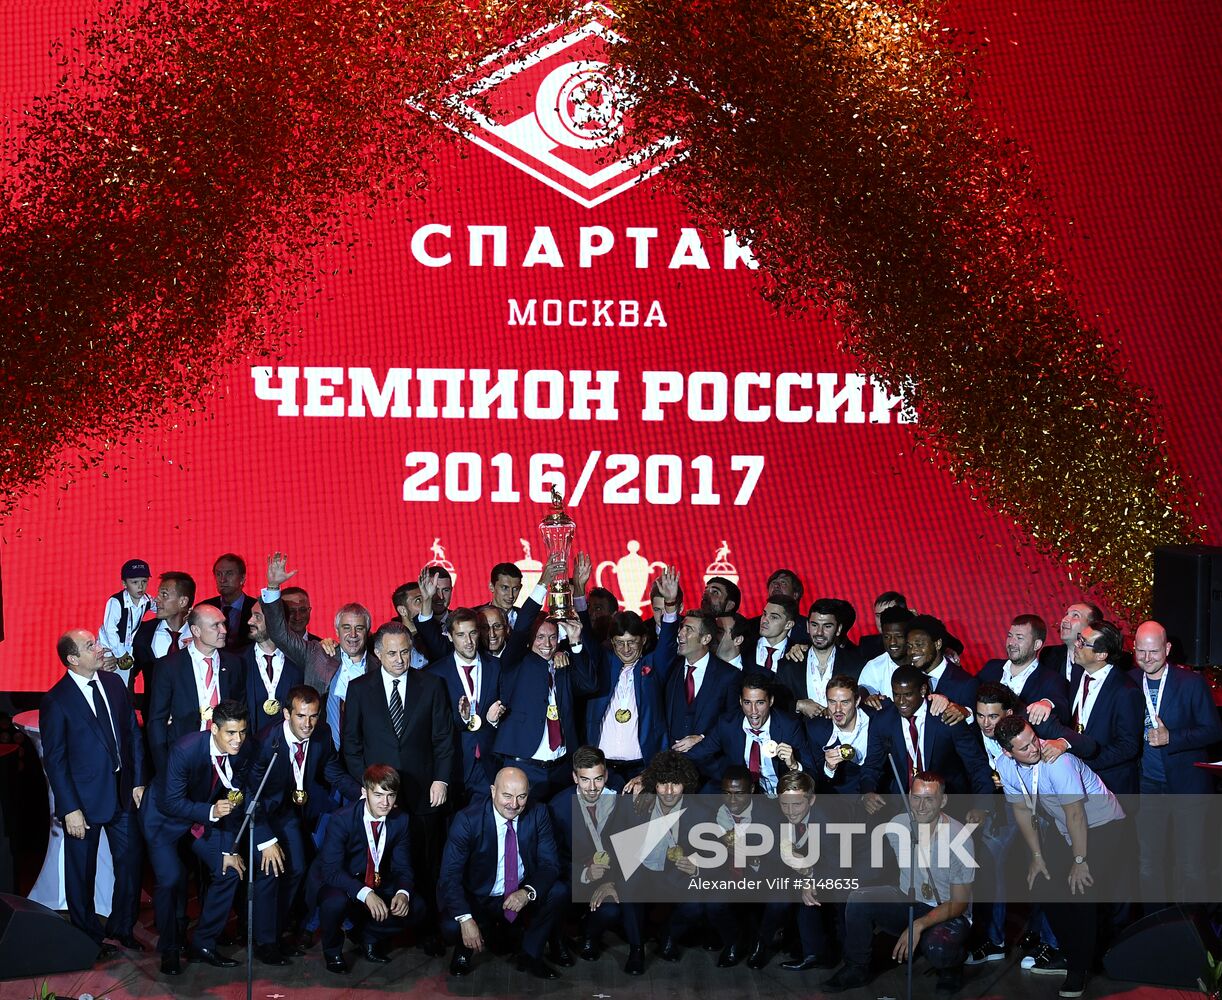 Honoring of FC Spartak, Russian football champion